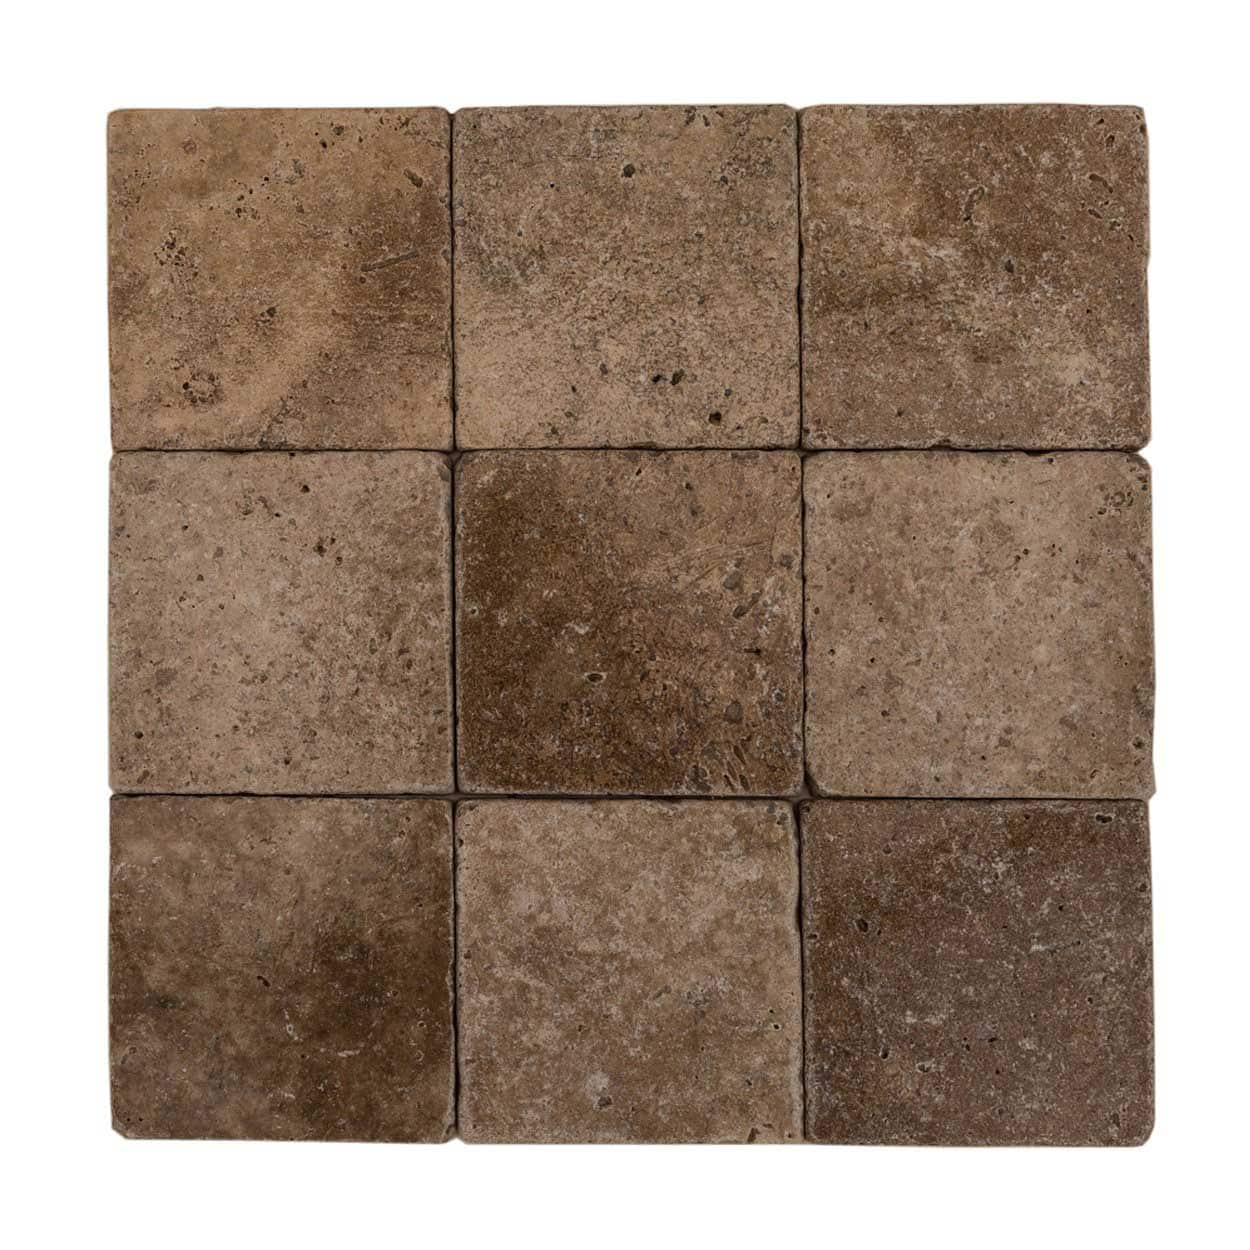 Maya USA tile - Stone Mountain, GA, US, floor tiles